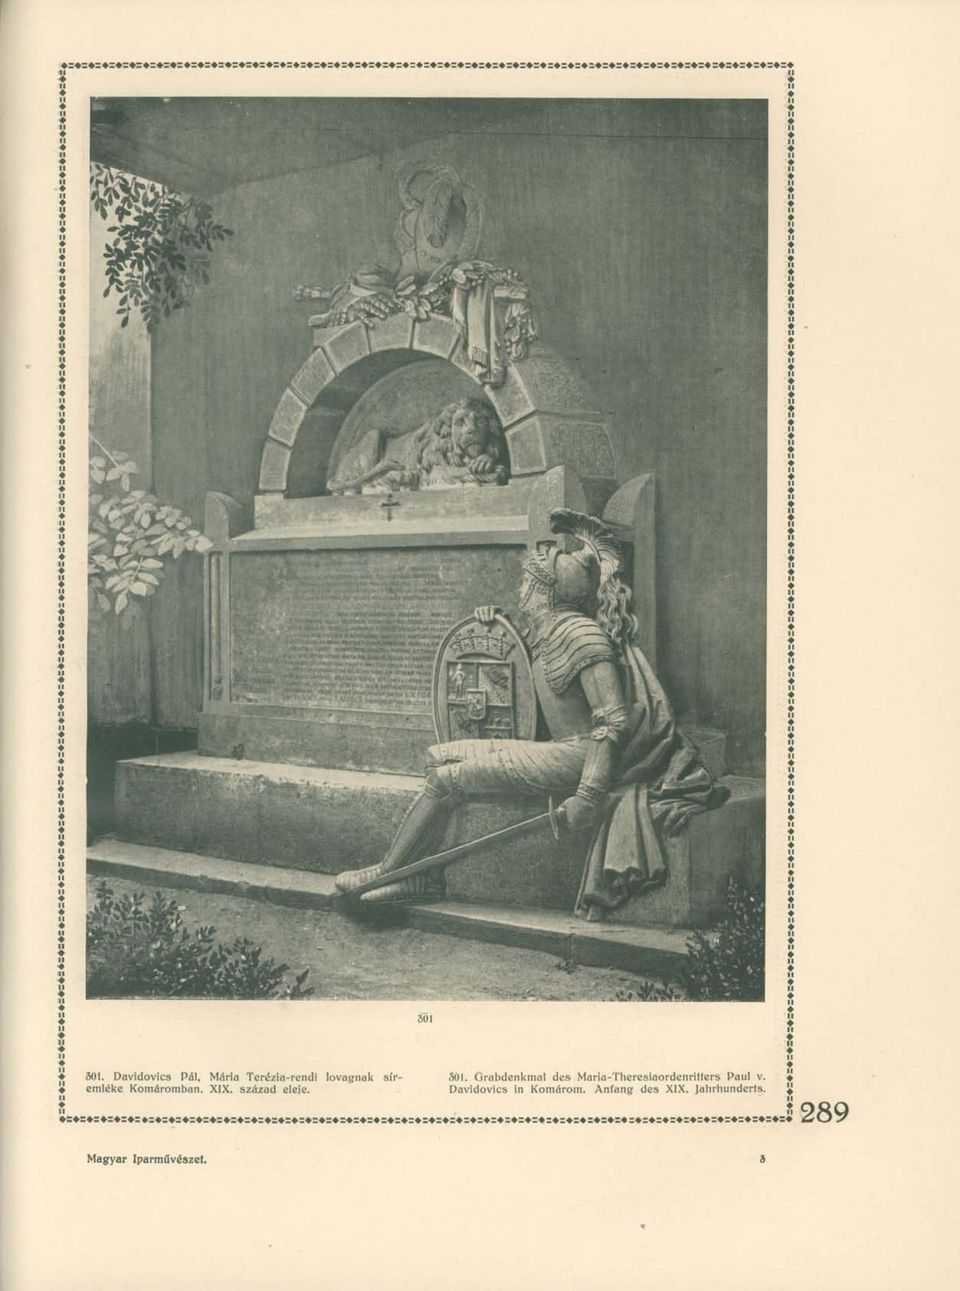 Grabdenkmal des Maria-Theresiaordenritters Paul v.